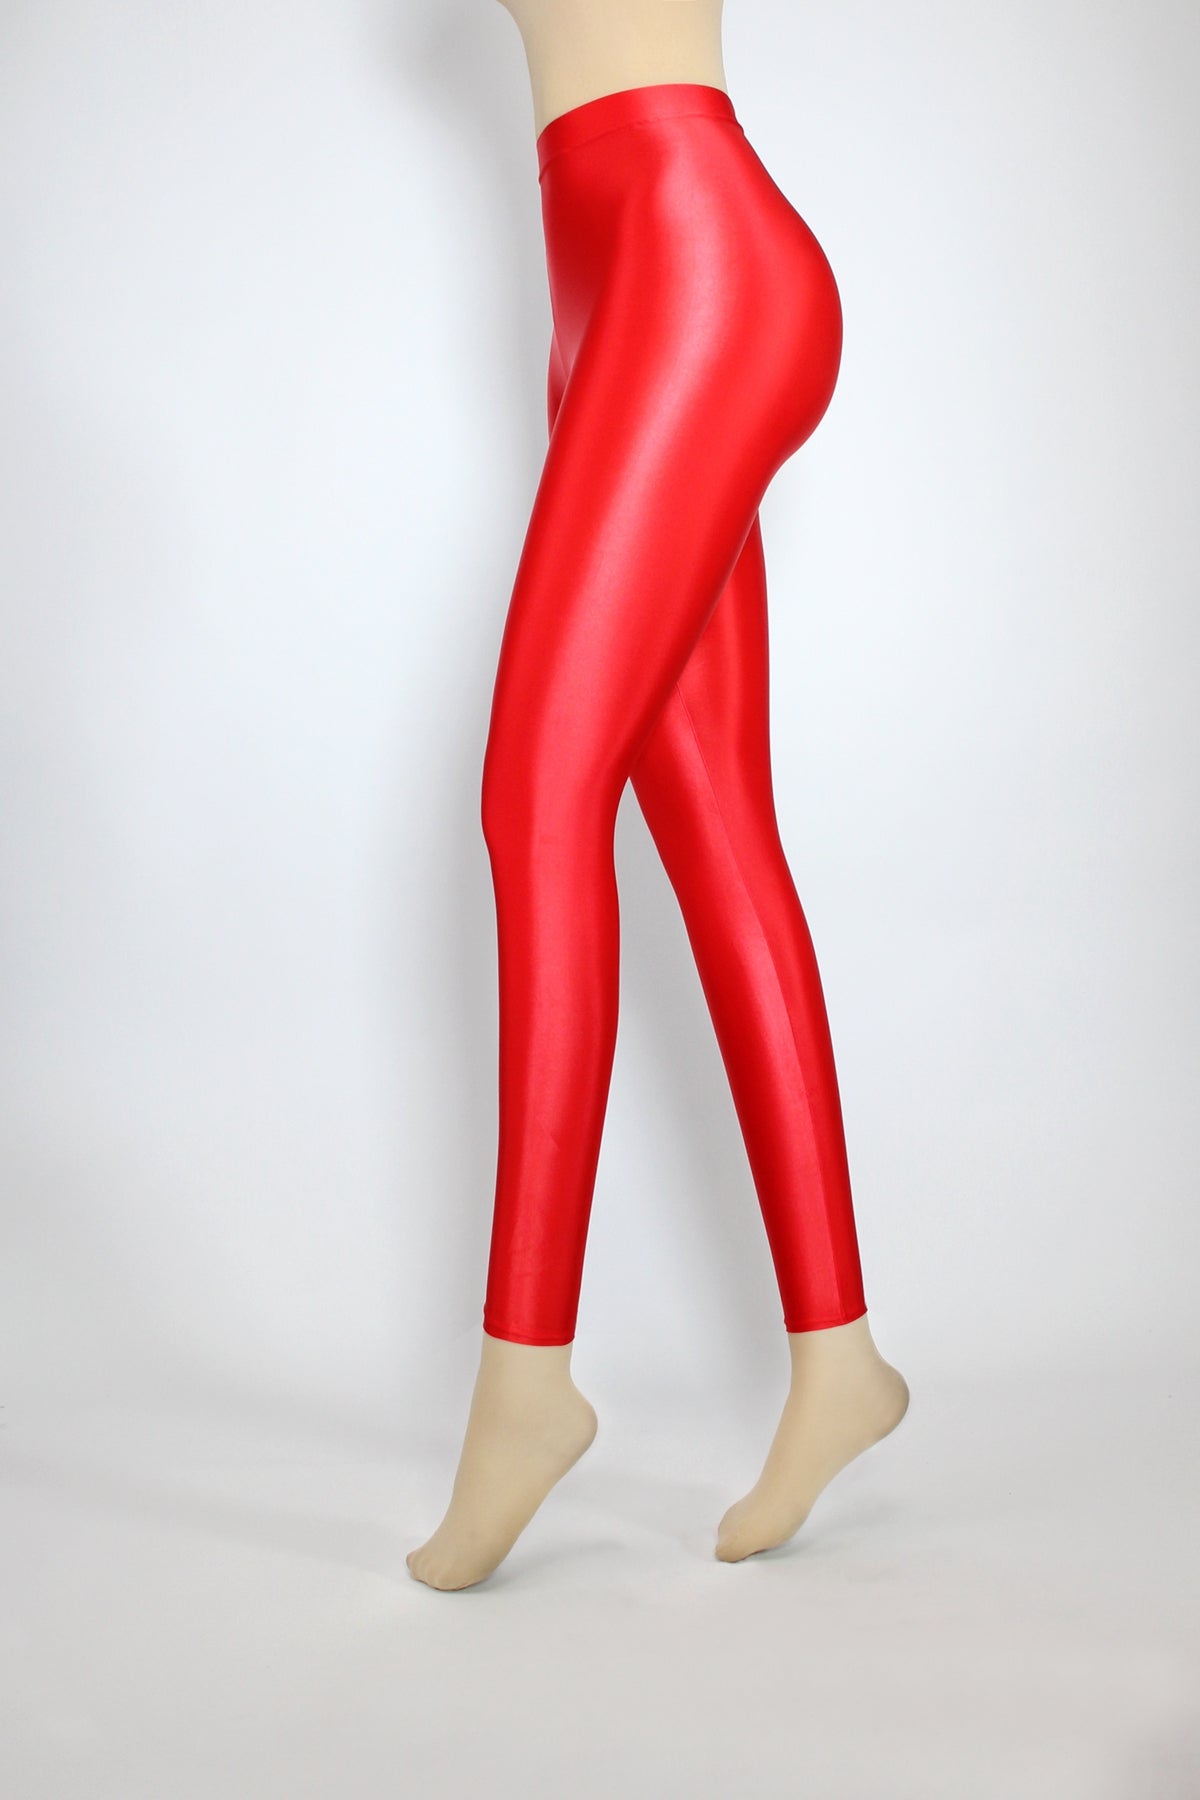 Spandex/Lycra Leggings - 15 Colors - Mid waist Tight Sexy Stocking Pantyhose